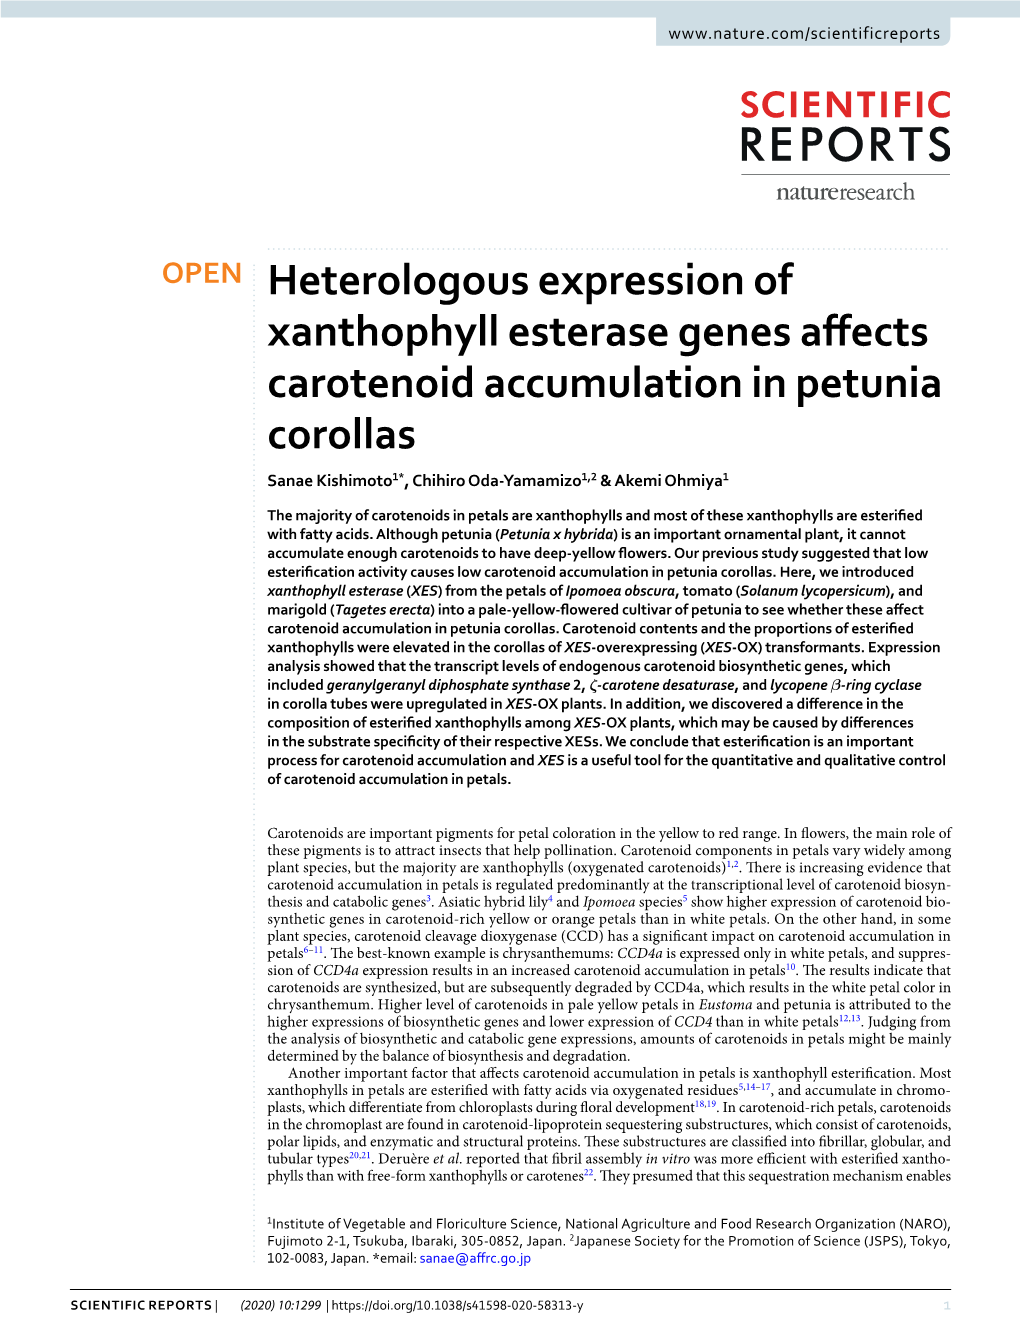 Heterologous Expression of Xanthophyll Esterase Genes Affects